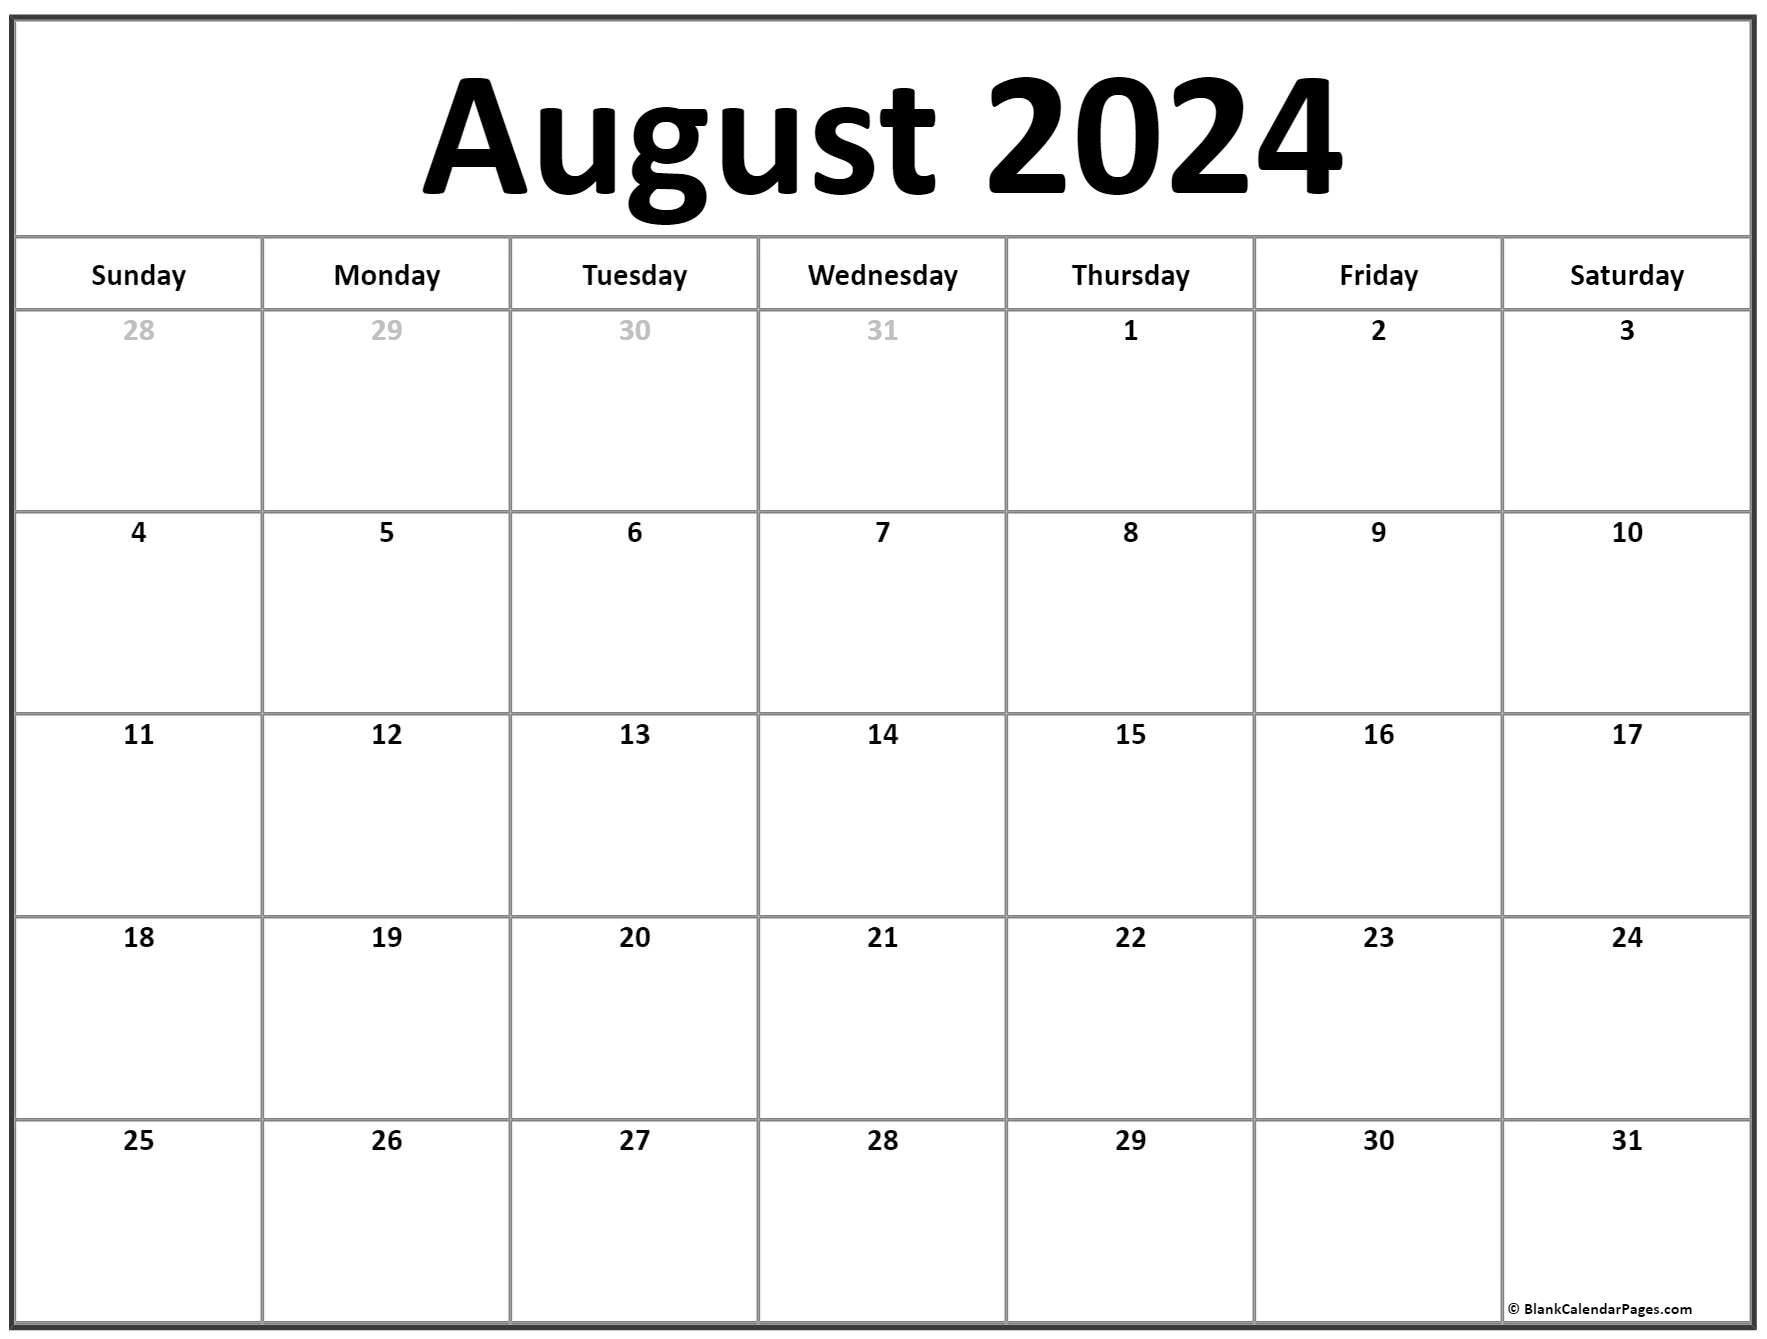 August 2021 calendar | free printable monthly calendars